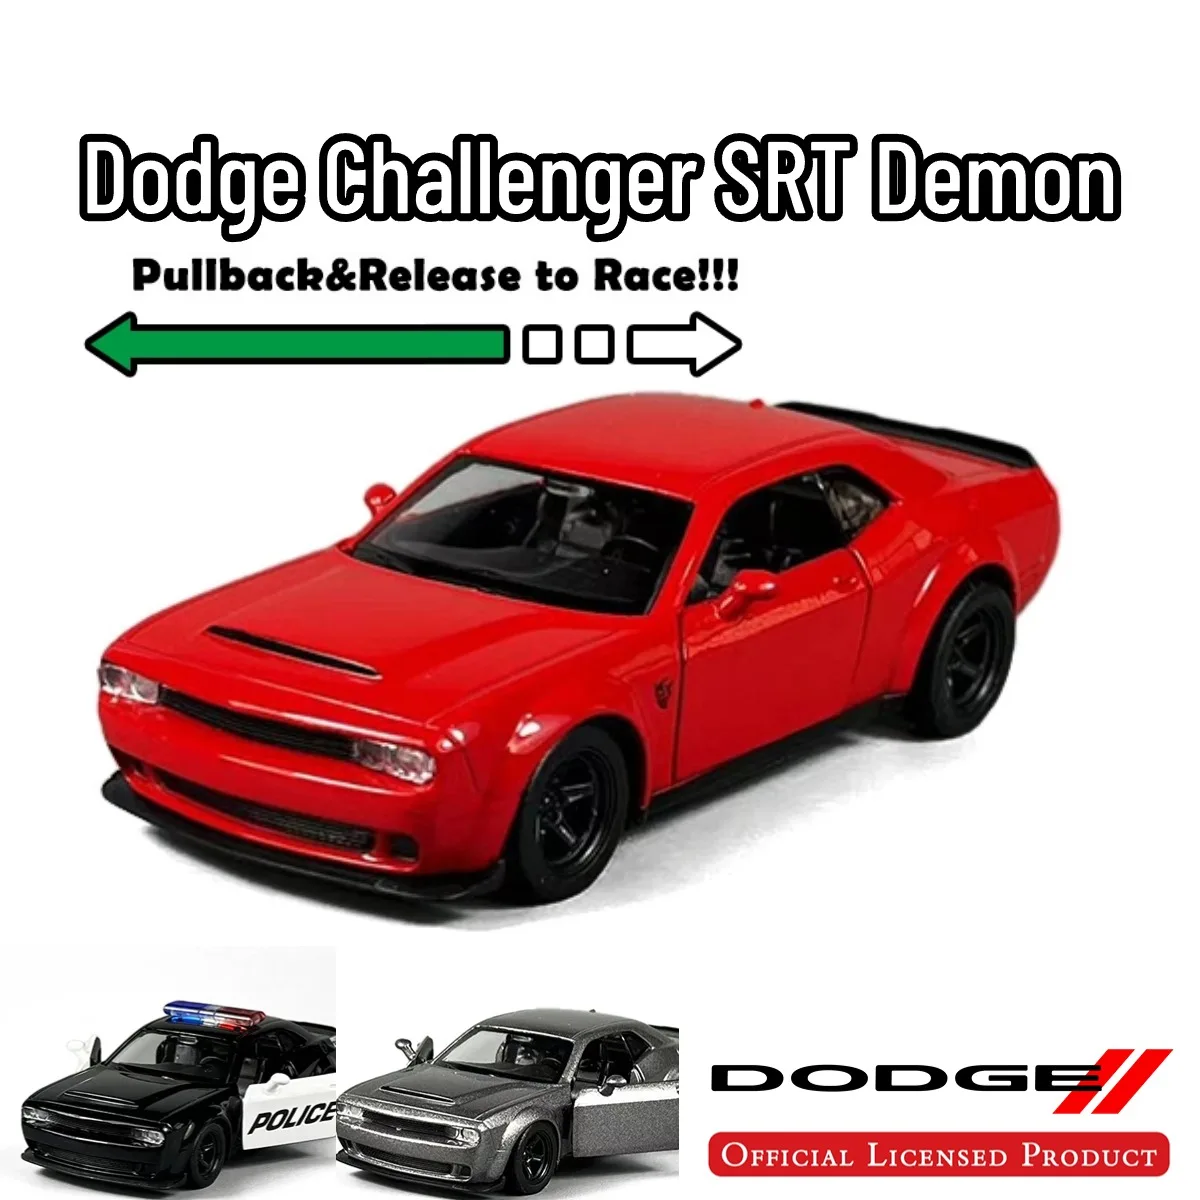 

1:36 Scale Replica Dodge Challenger SRT Demon Retro Muscle Car Model Home Office Interior Decor Ornament Kid Boy Xmas Gift Toy